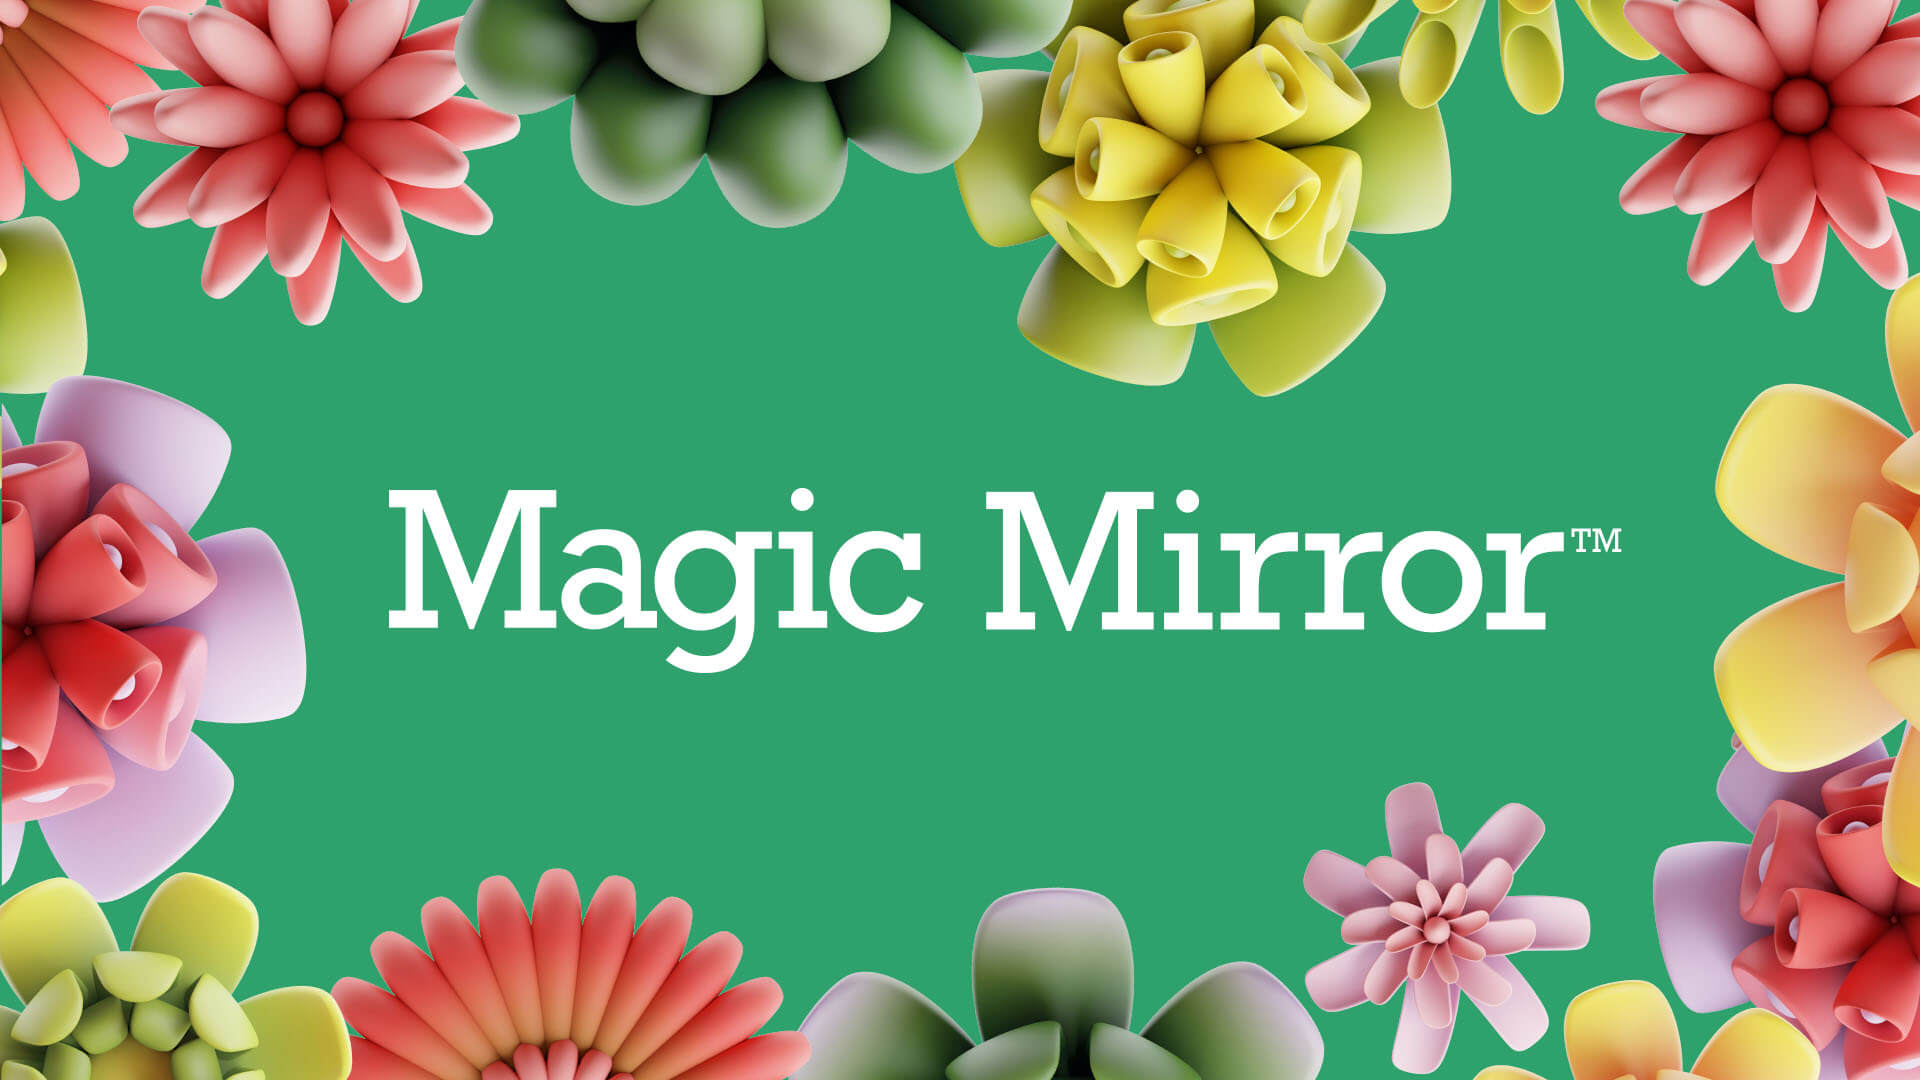 VANDAL_Magic_Mirror_Title_Frame_c